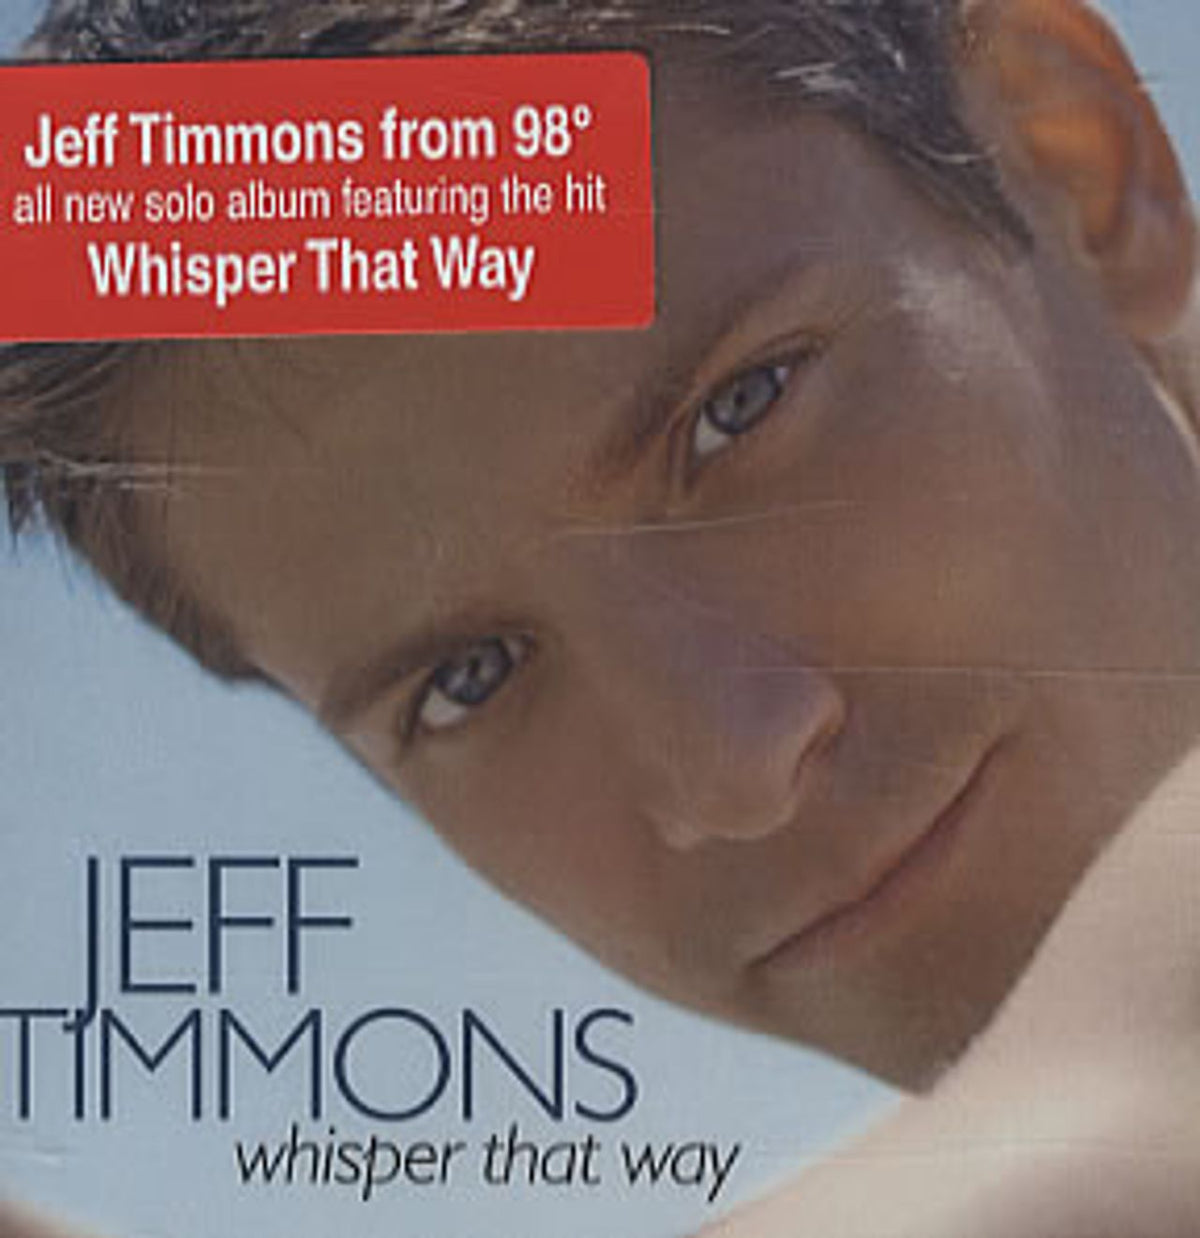 JEFF TIMMONS pop Whisper That Way CD autograph 98 Degrees 2004 Jim Brickman